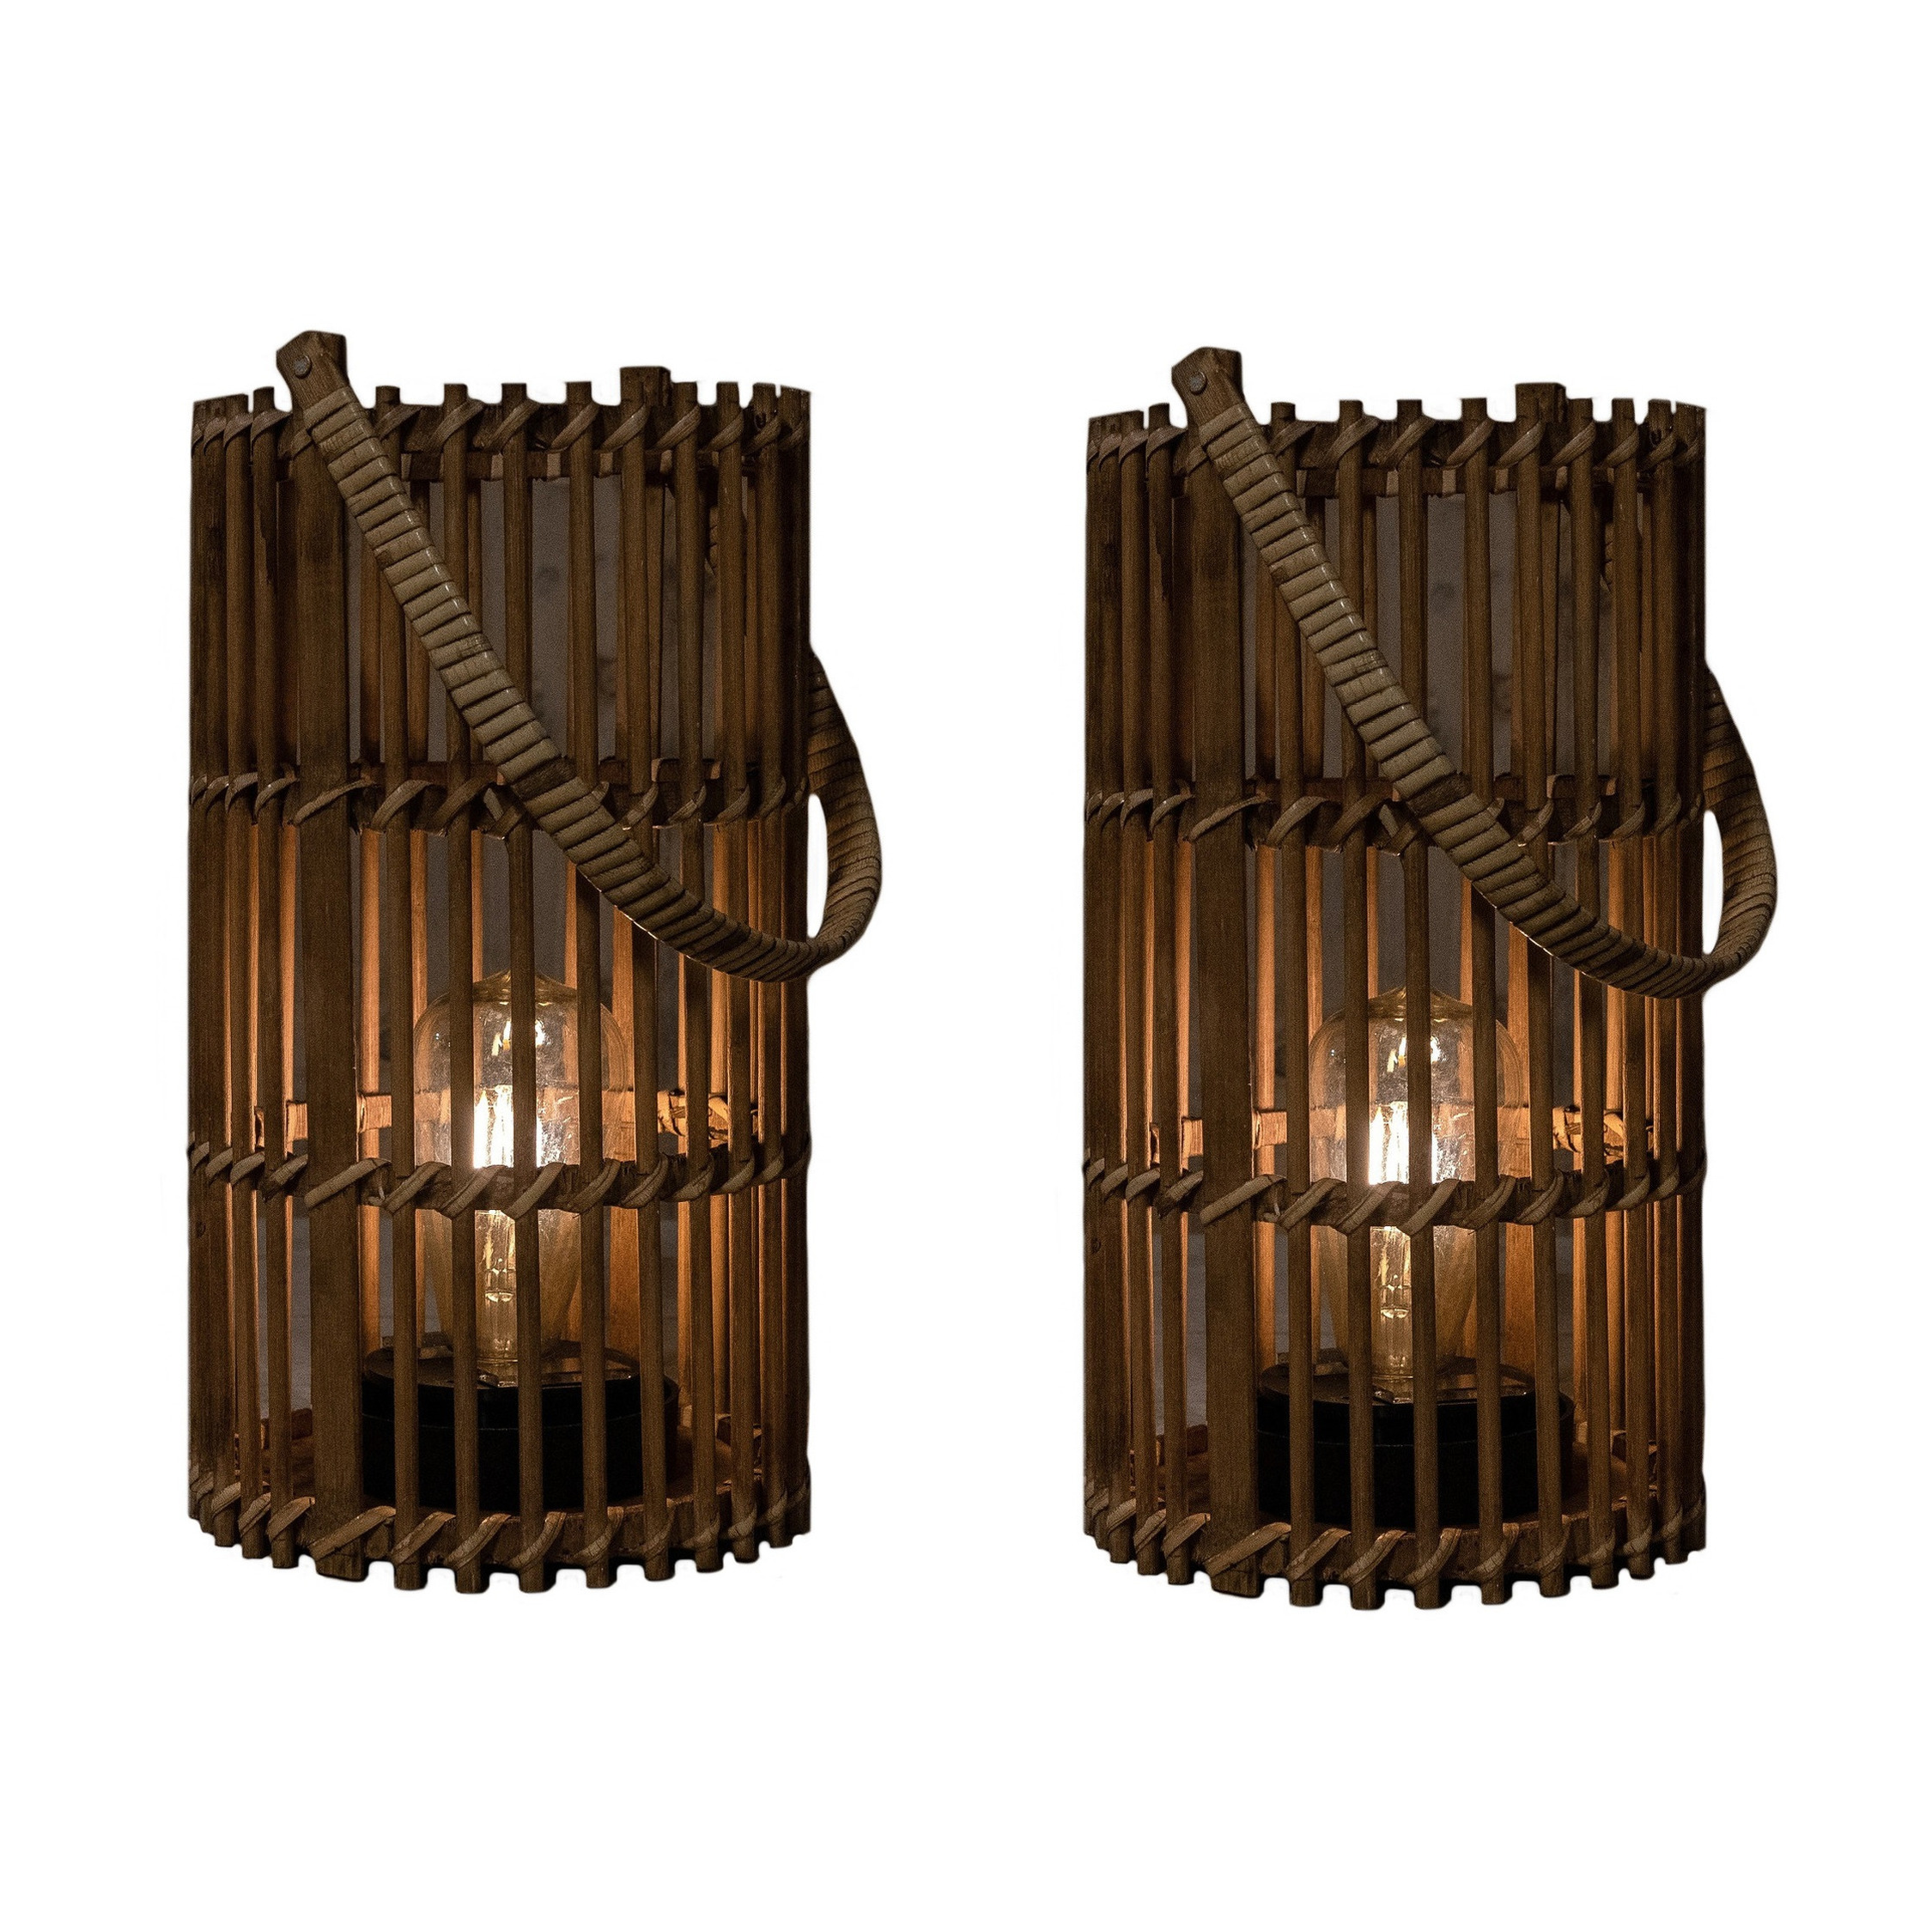 Anna's Collection Solar lantaarn set 2x voor buiten D17 x H32 cm bamboe hout windlicht